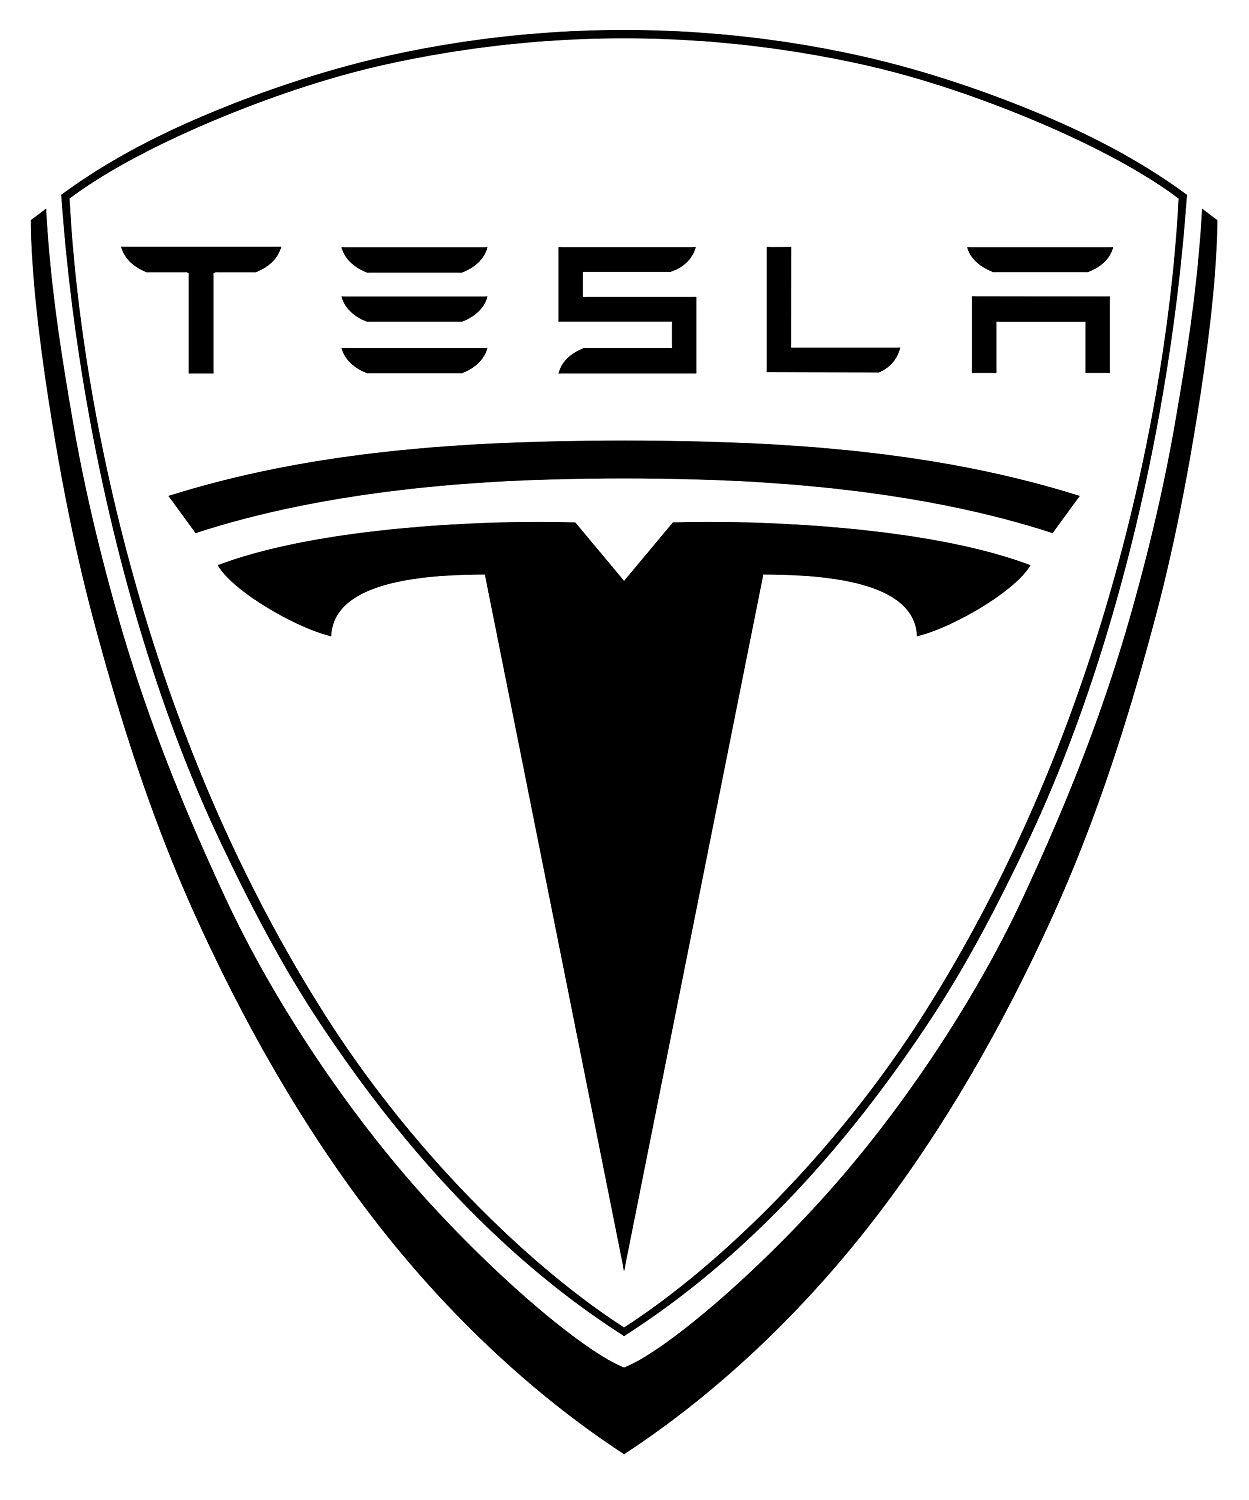 Tesla Brand Logo - Amazon.com : Large Tesla Logo Wall Decal Decals Vinyl Sticker Car ...